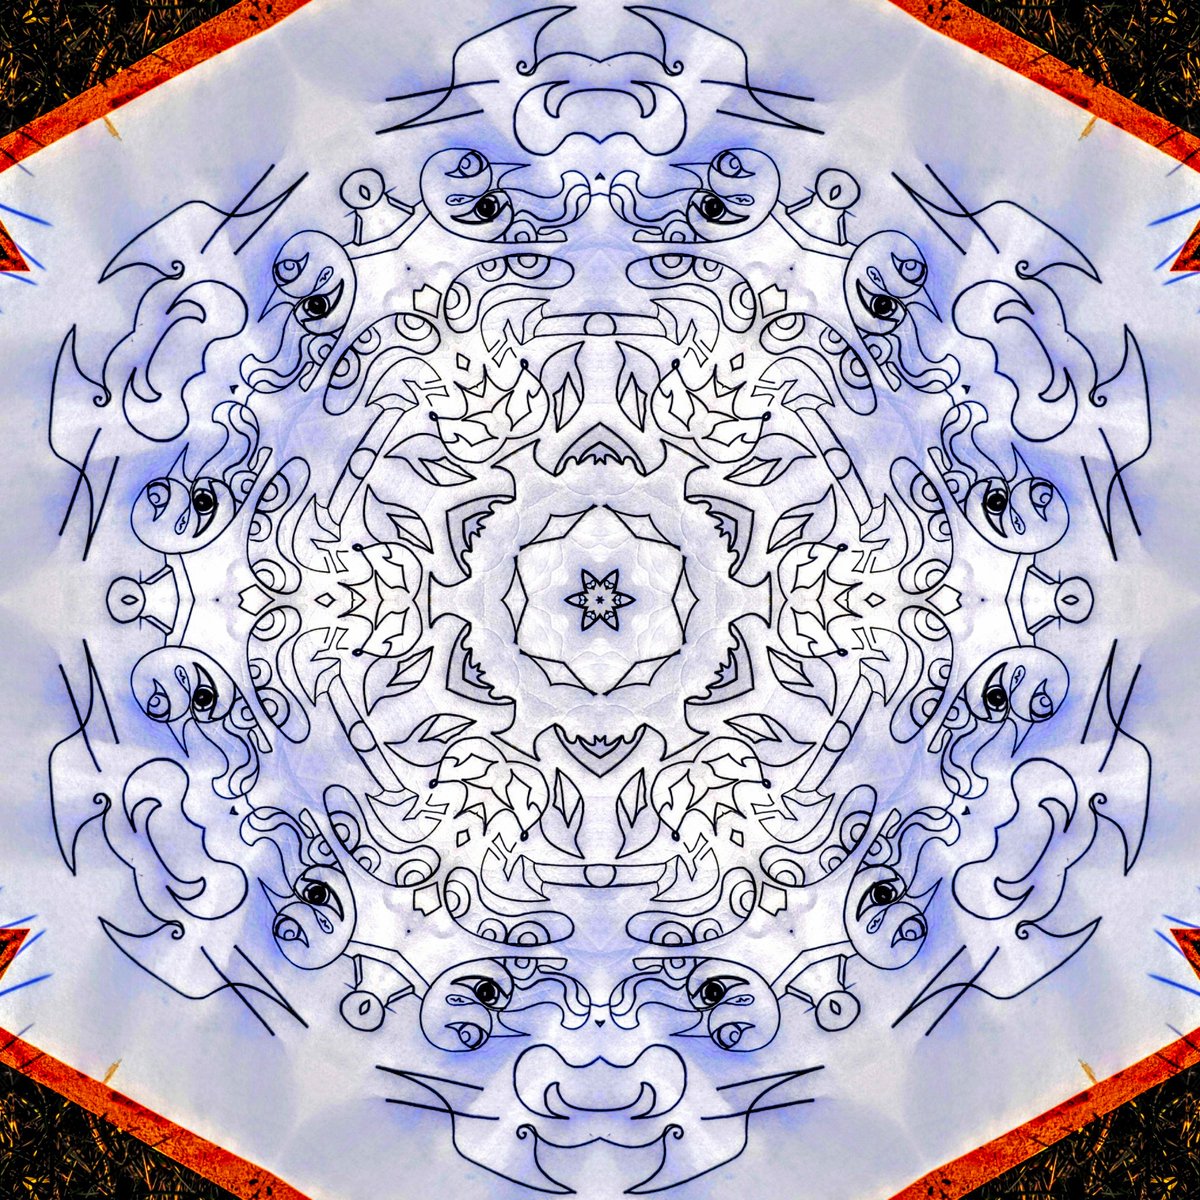 Soul
-Devon

#mandala #kaleidoscope #kaleidoscopeart #mandalaartist #trippyvibes #trippy #trippyedits #trippydrawing #mirrorlab #drawing #artandcraft #lucidart #psychedelic